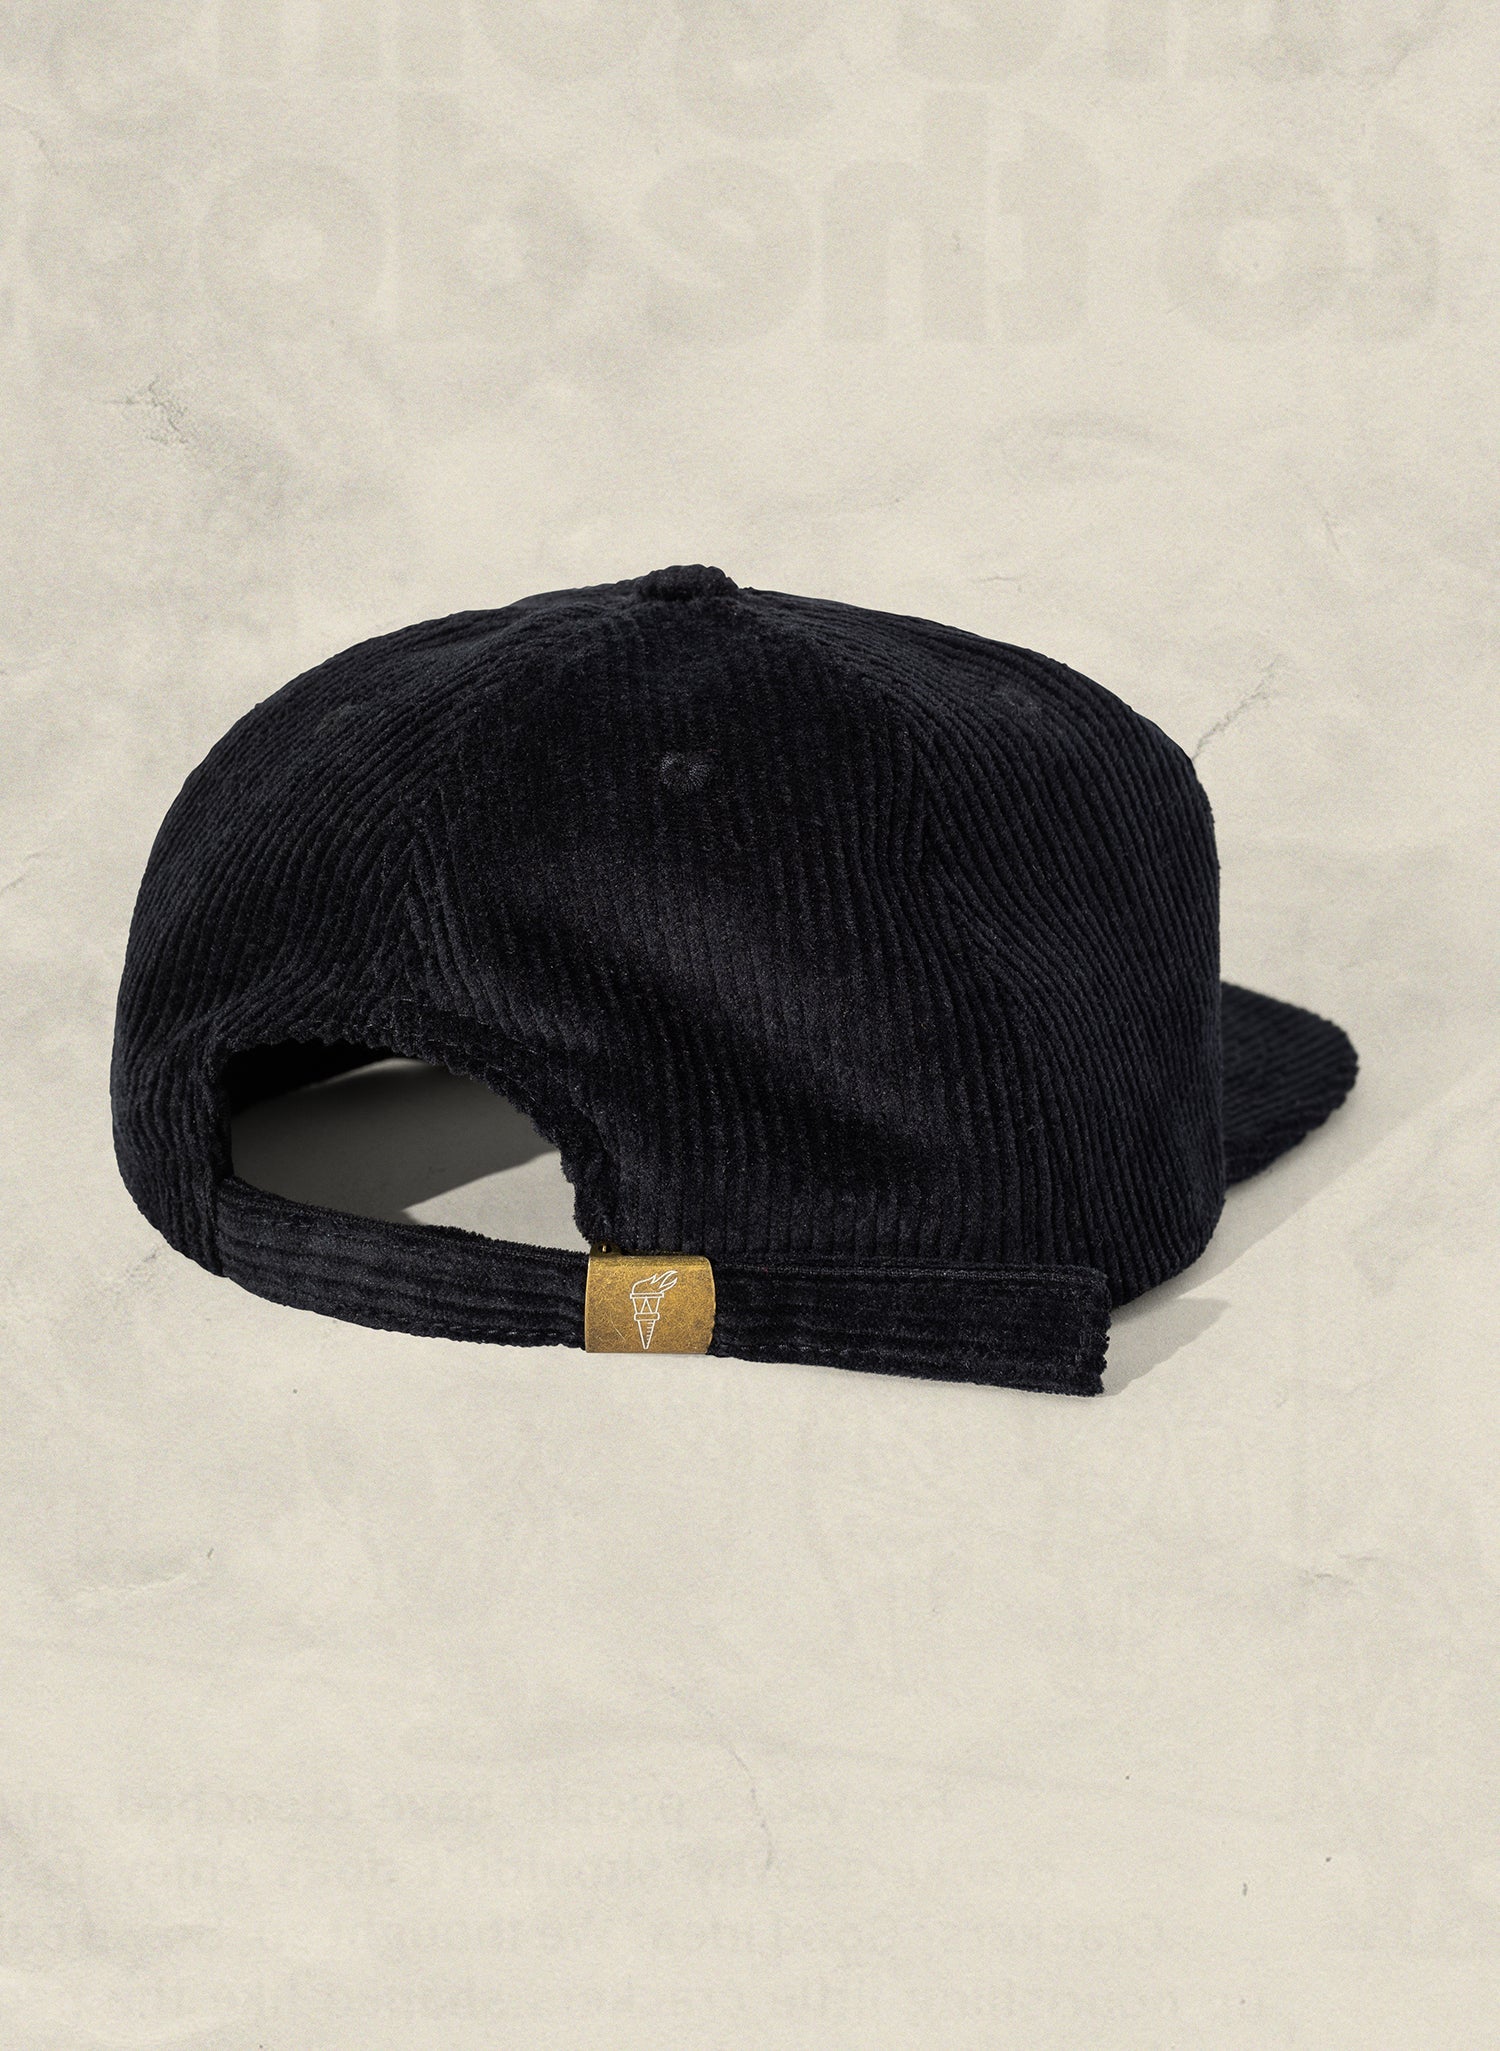 Weld Mfg Field Trip Hat - Unstructured 5 panel corduroy strapback hat, vintage inspired baseball hat, black